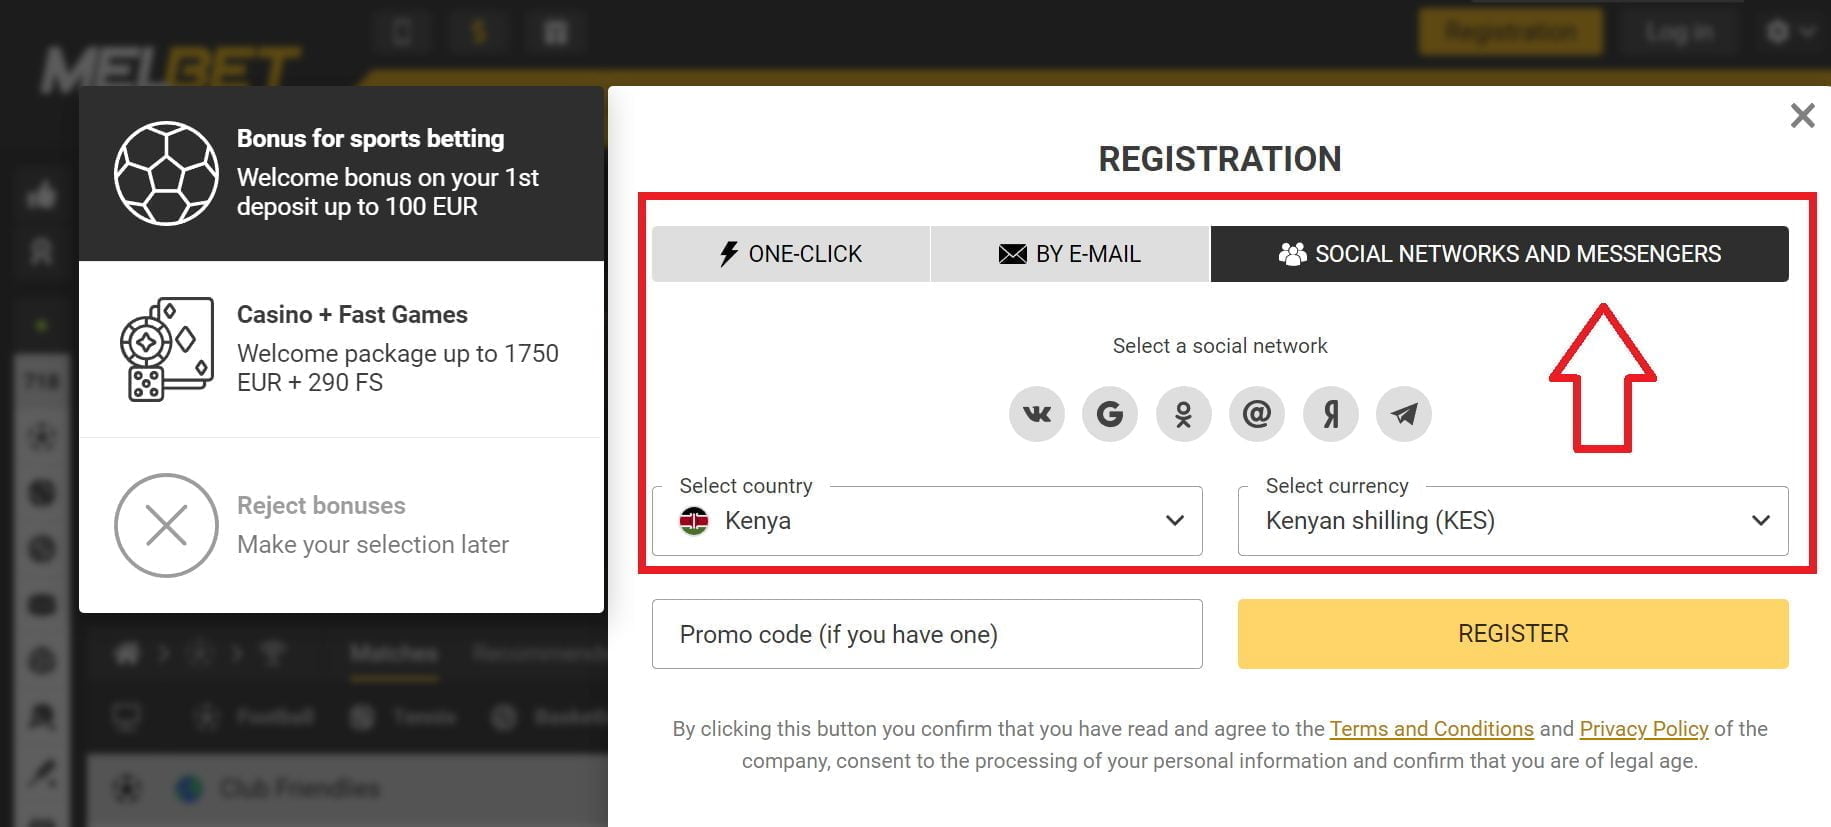 Melbet login Kenya: Data import from a social media account